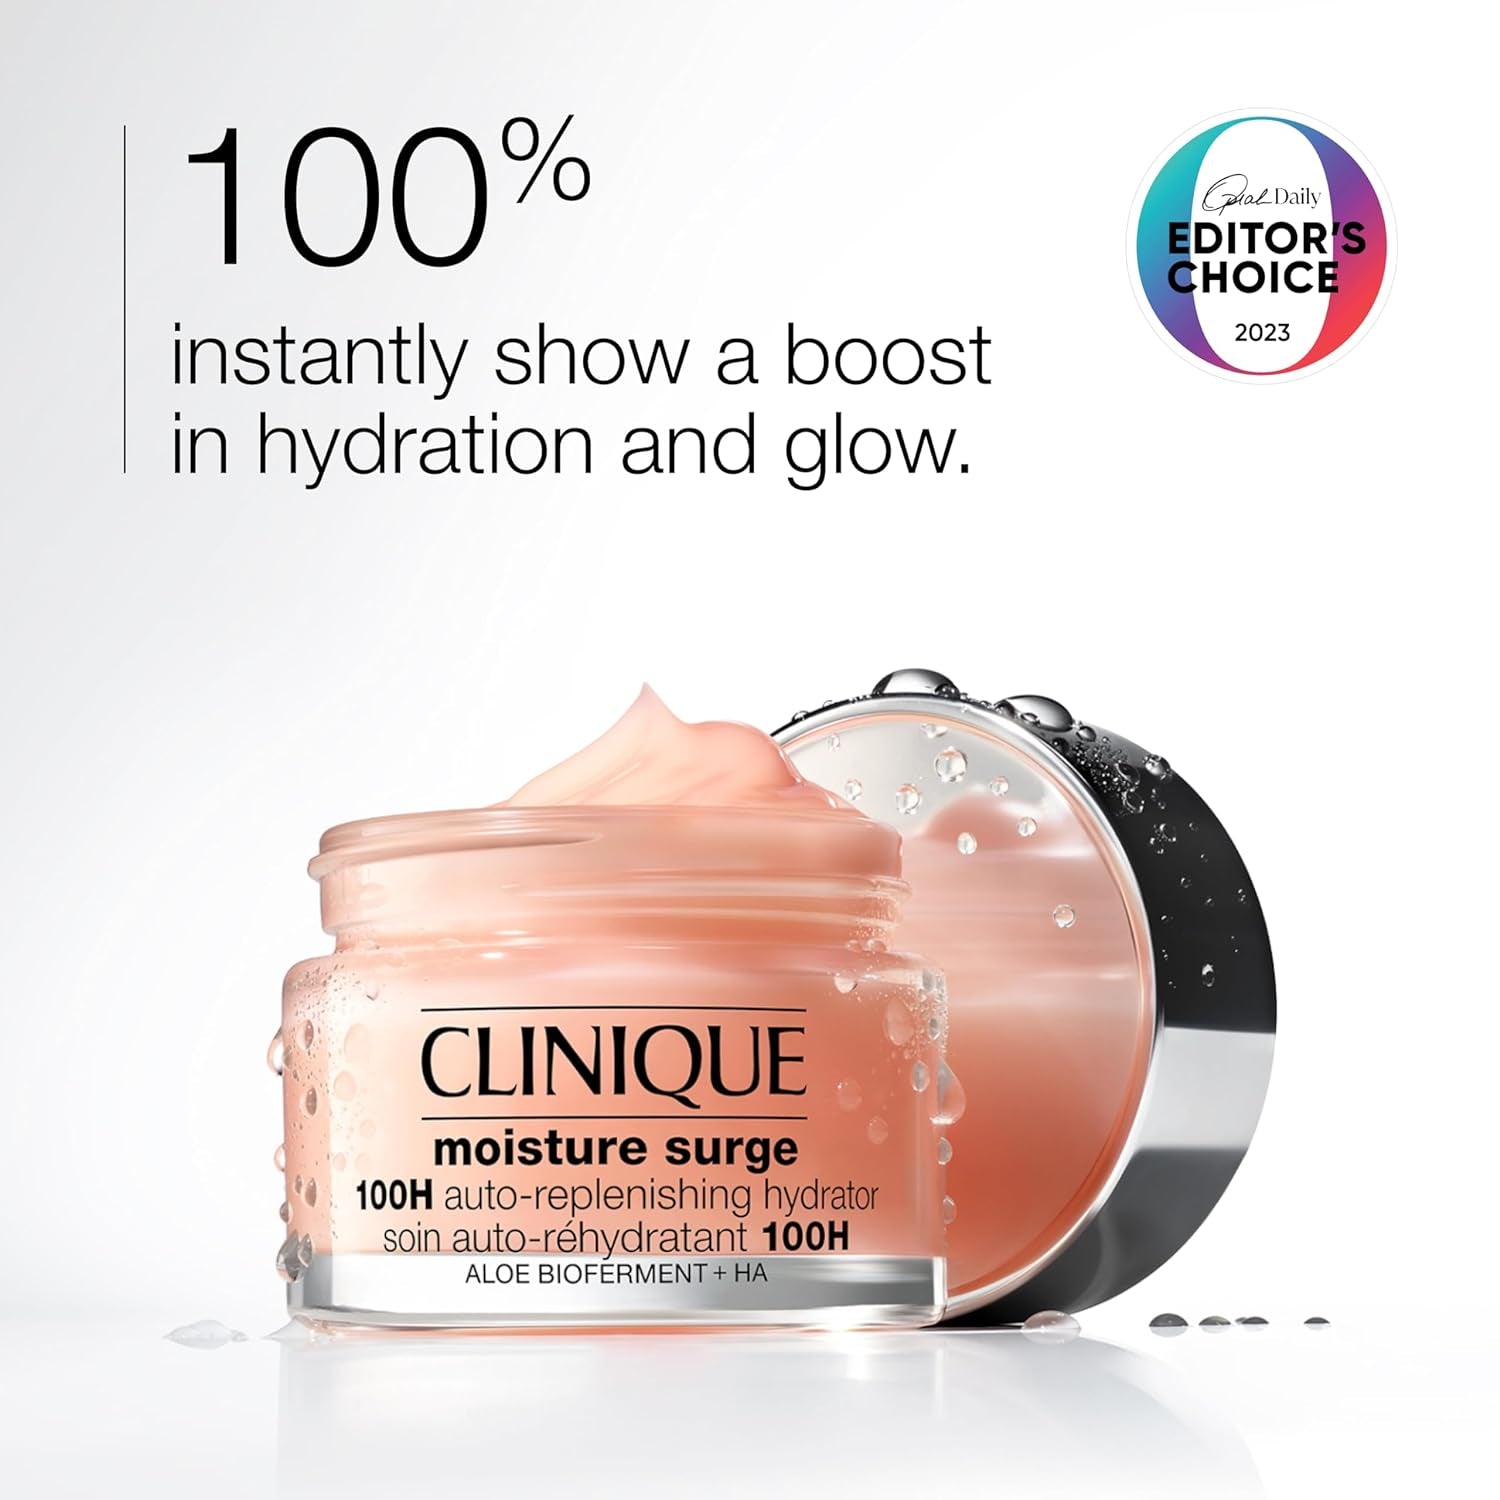 Clinique Moisture Surge 100H Auto-Replenishing Hydrator Face Moisturizer